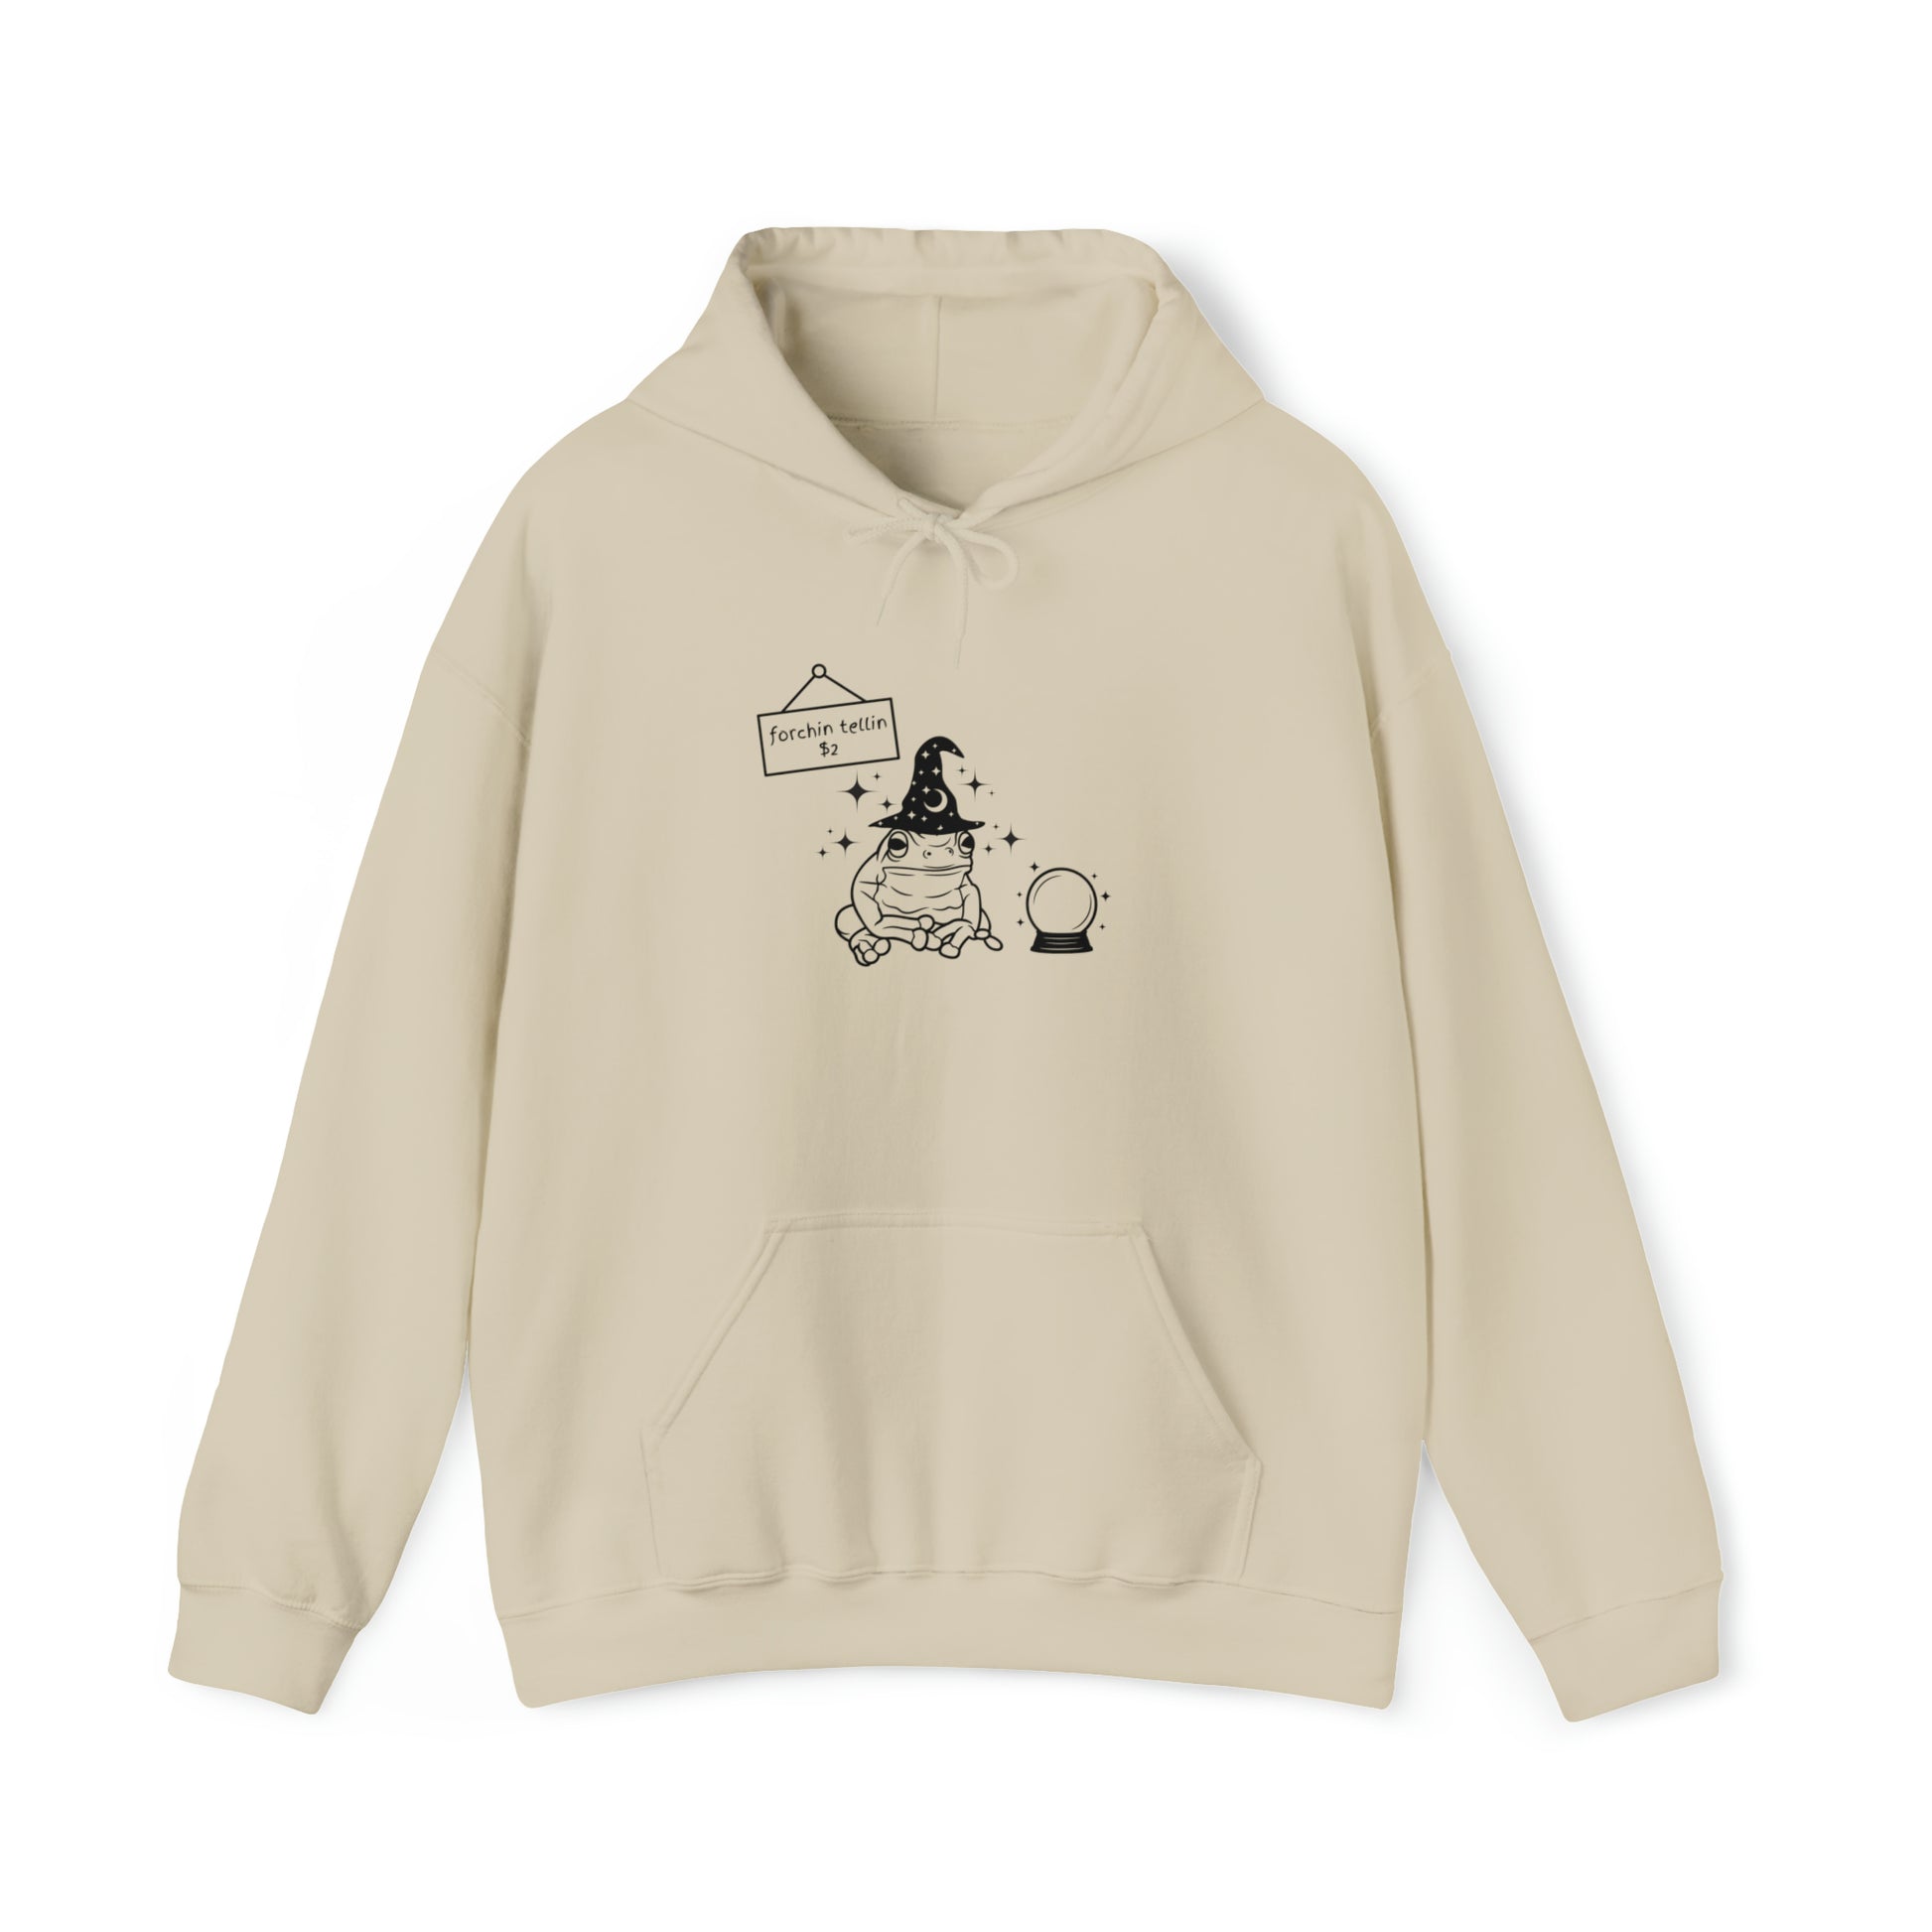 Forchin Tellin Halloween Frog Hoodie Hooded Sweatshirt - Fractalista Designs